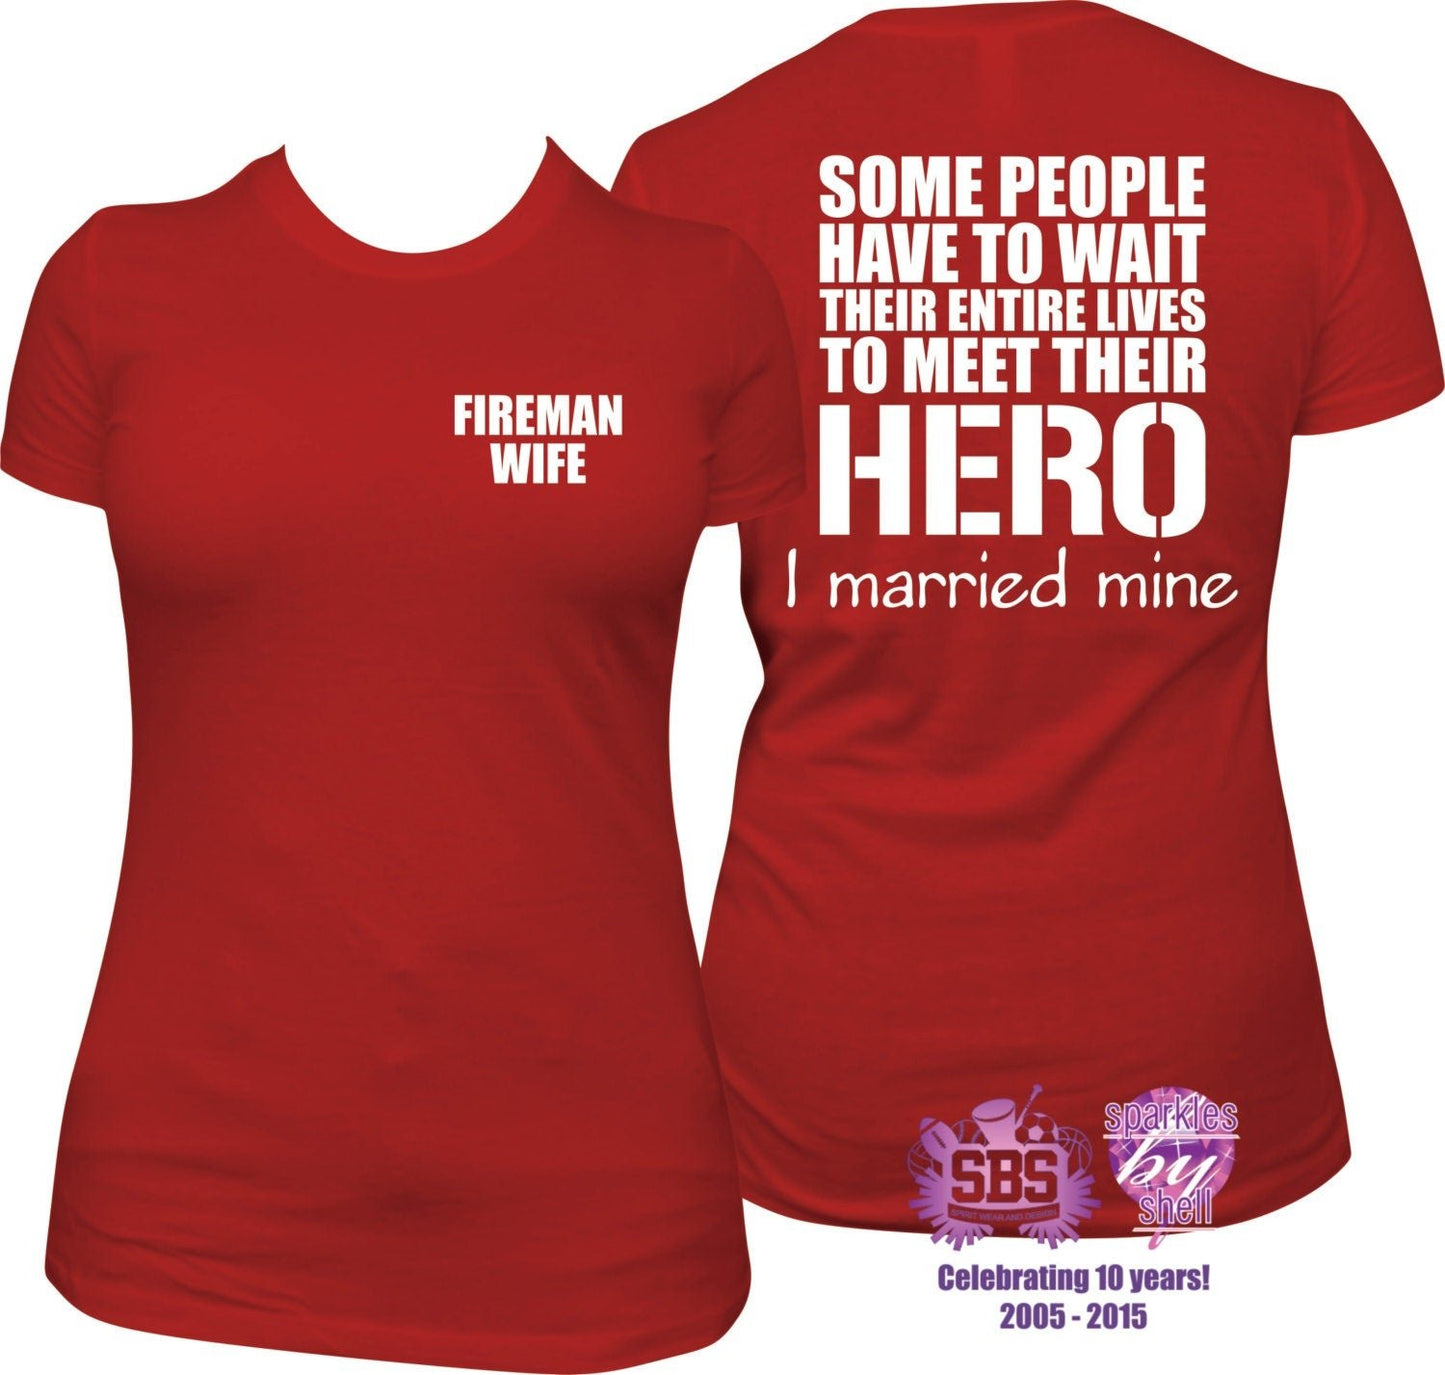 Firefighter wife shirt, I married my hero - SBS T Shop